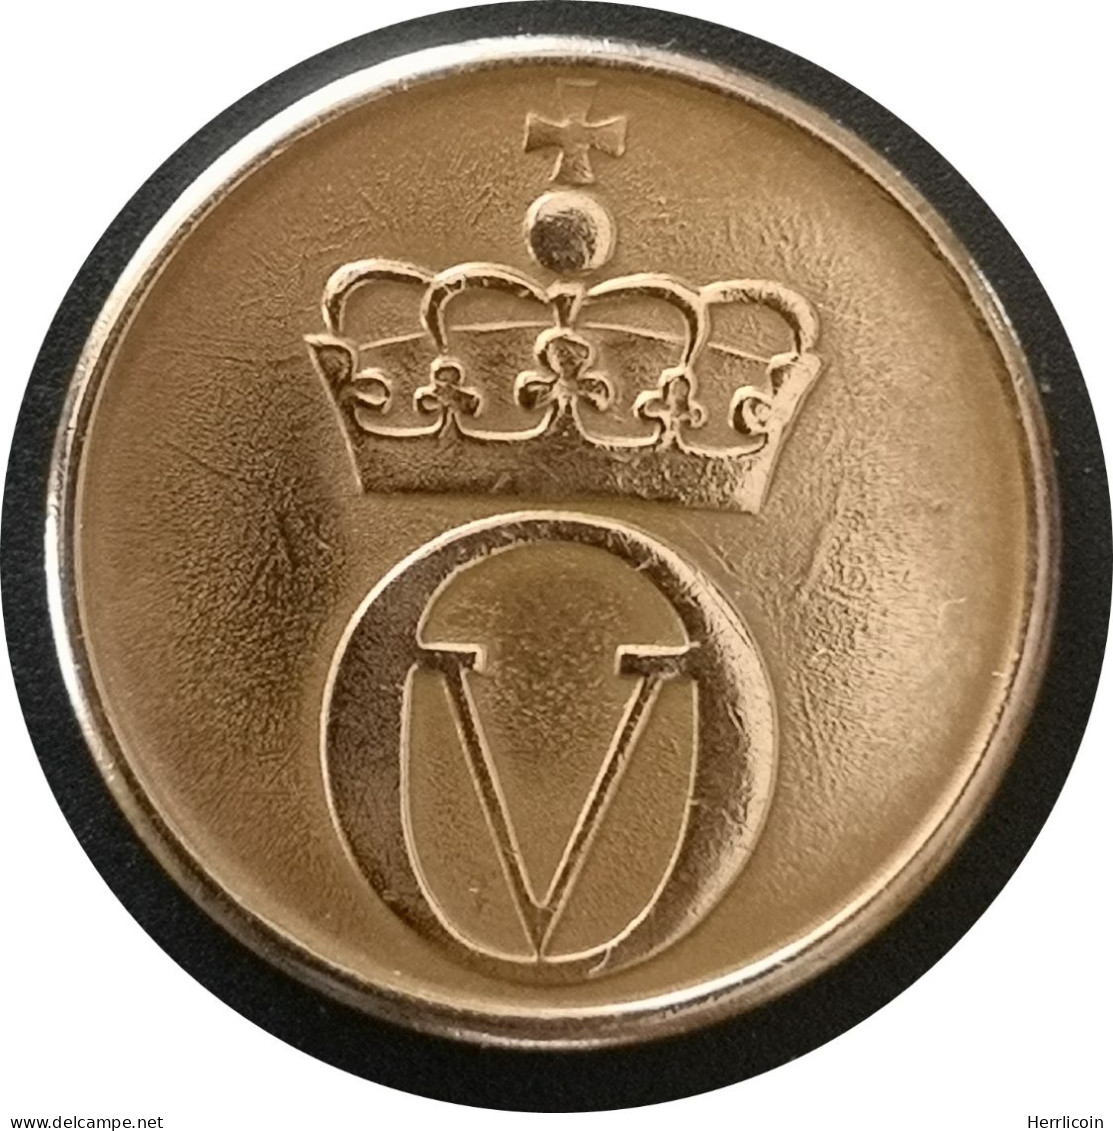 Monnaie Norvège - 1967 - 2 øre - Olav V Grandes Inscriptions - Norvège